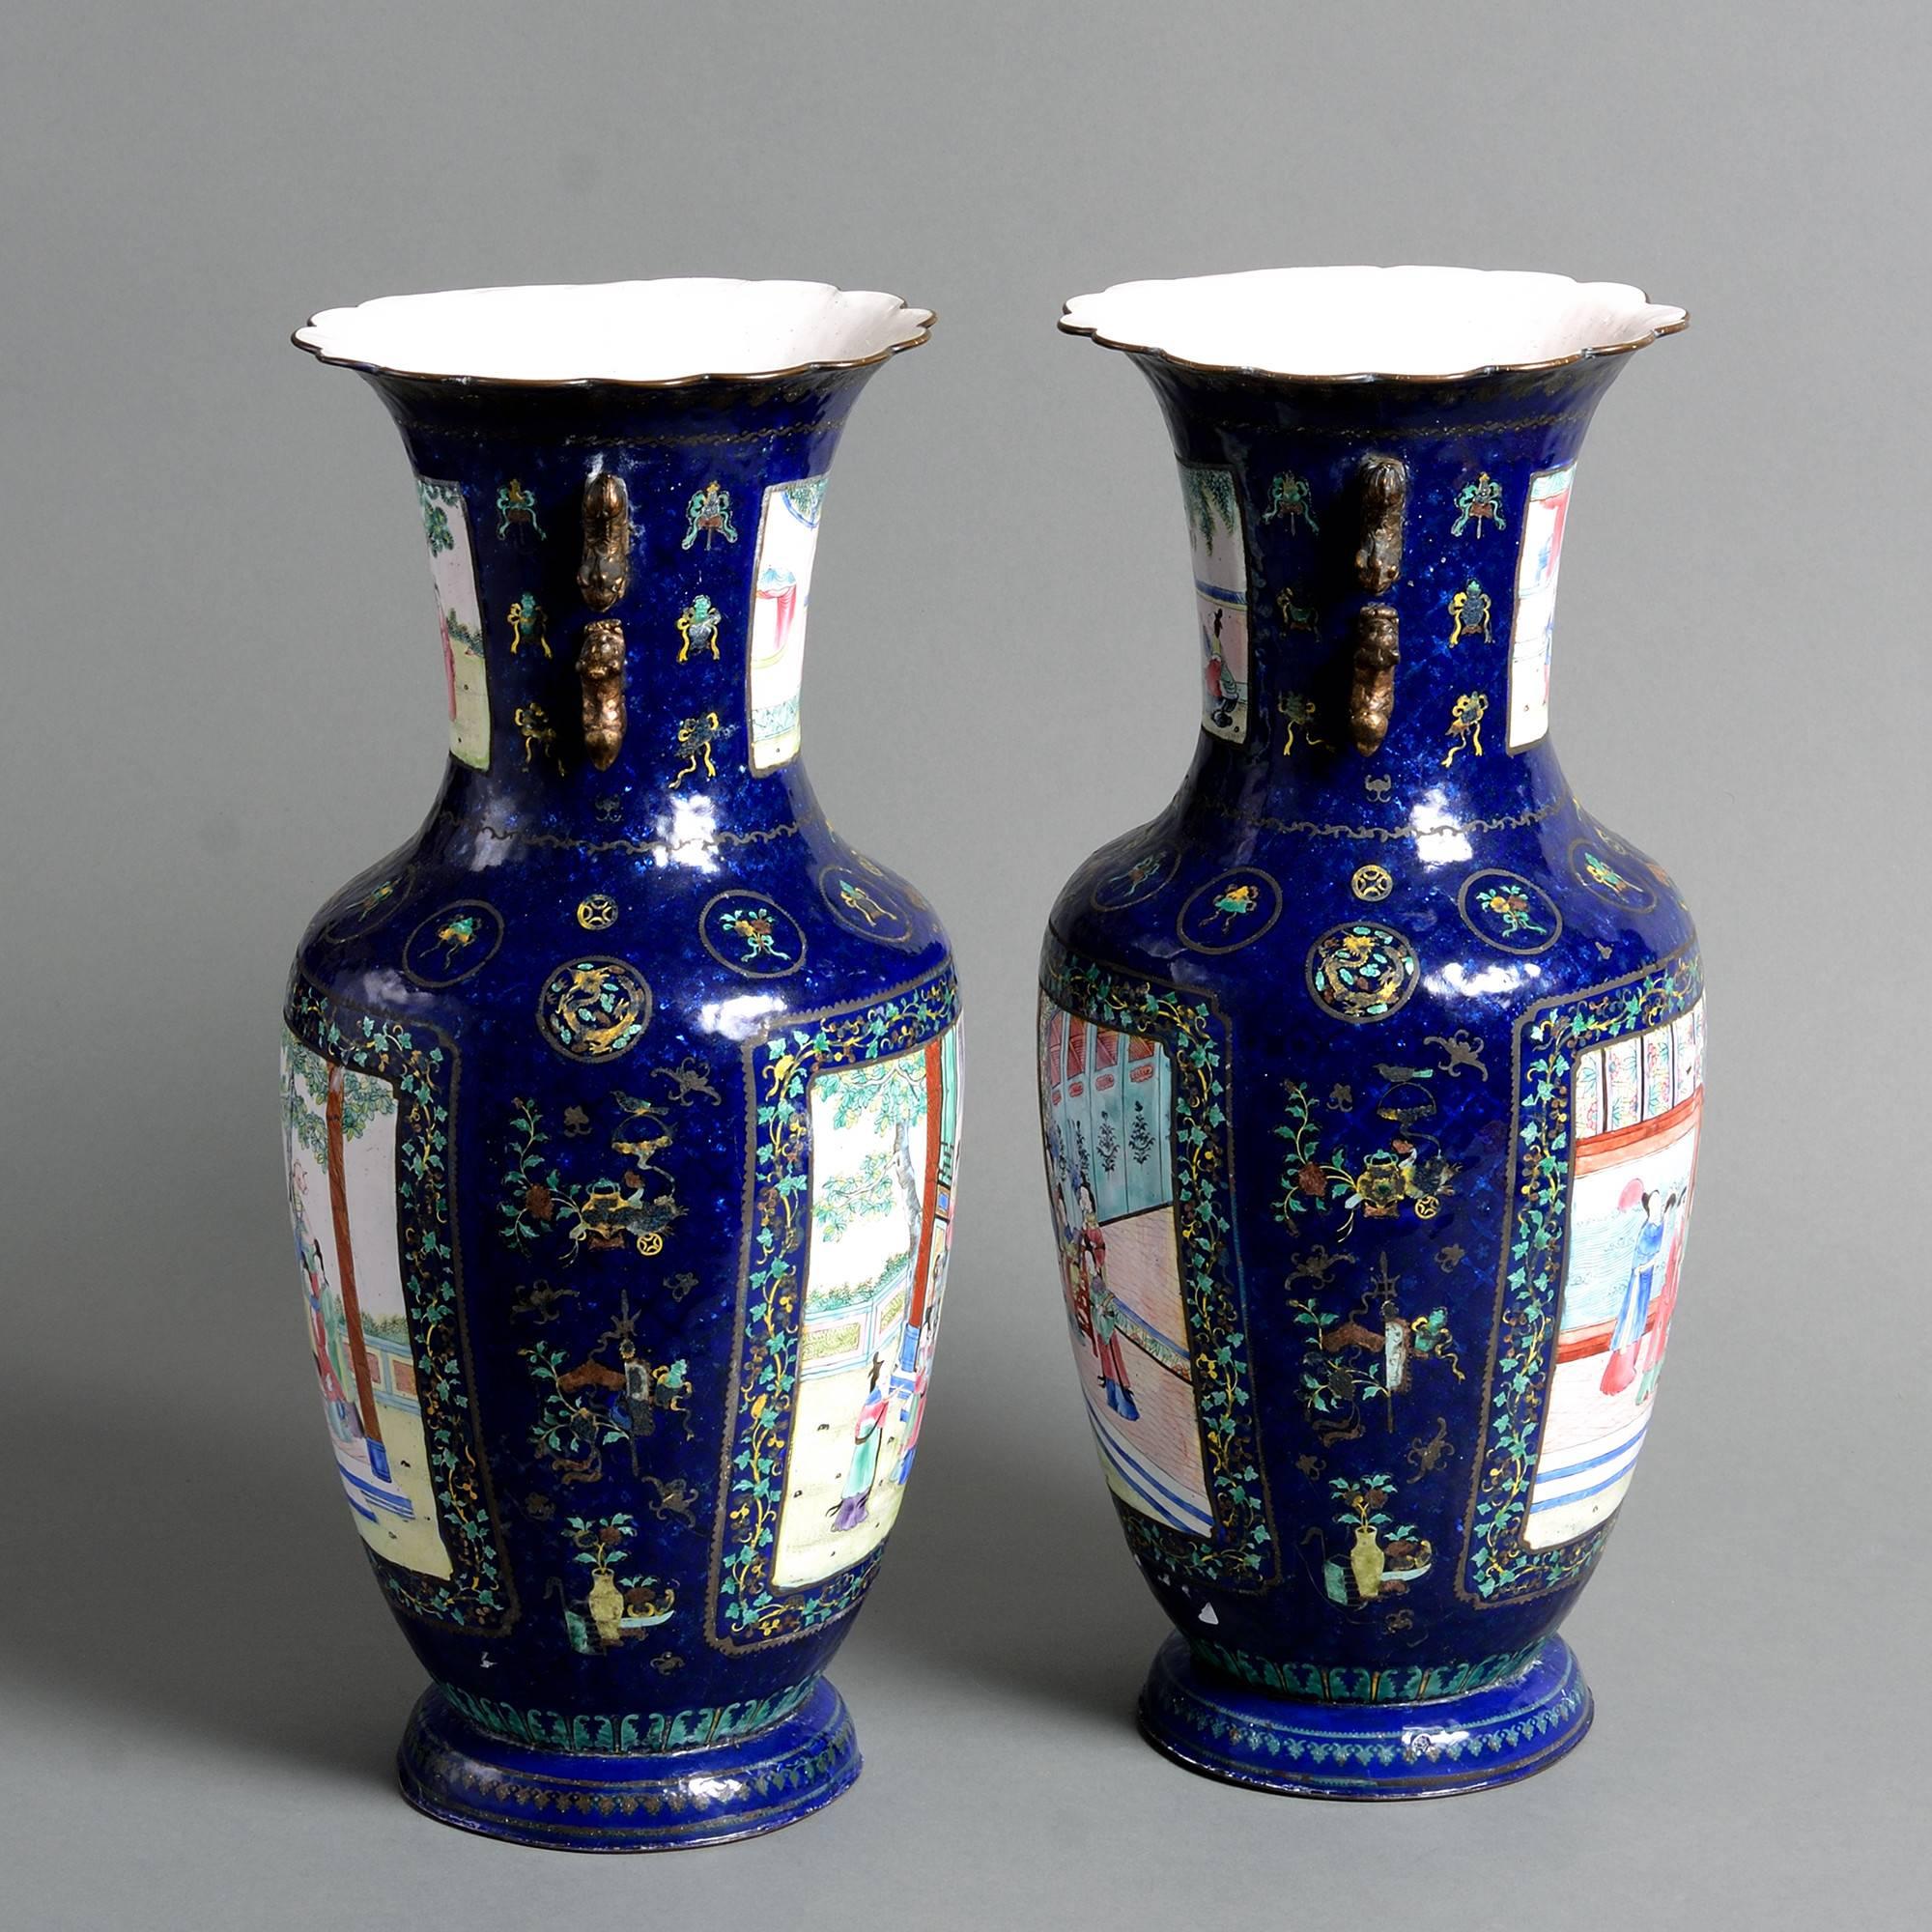 Chinese Export Pair of 19th Century Canton Dark Blue Enamel Vases with figurative court scenes